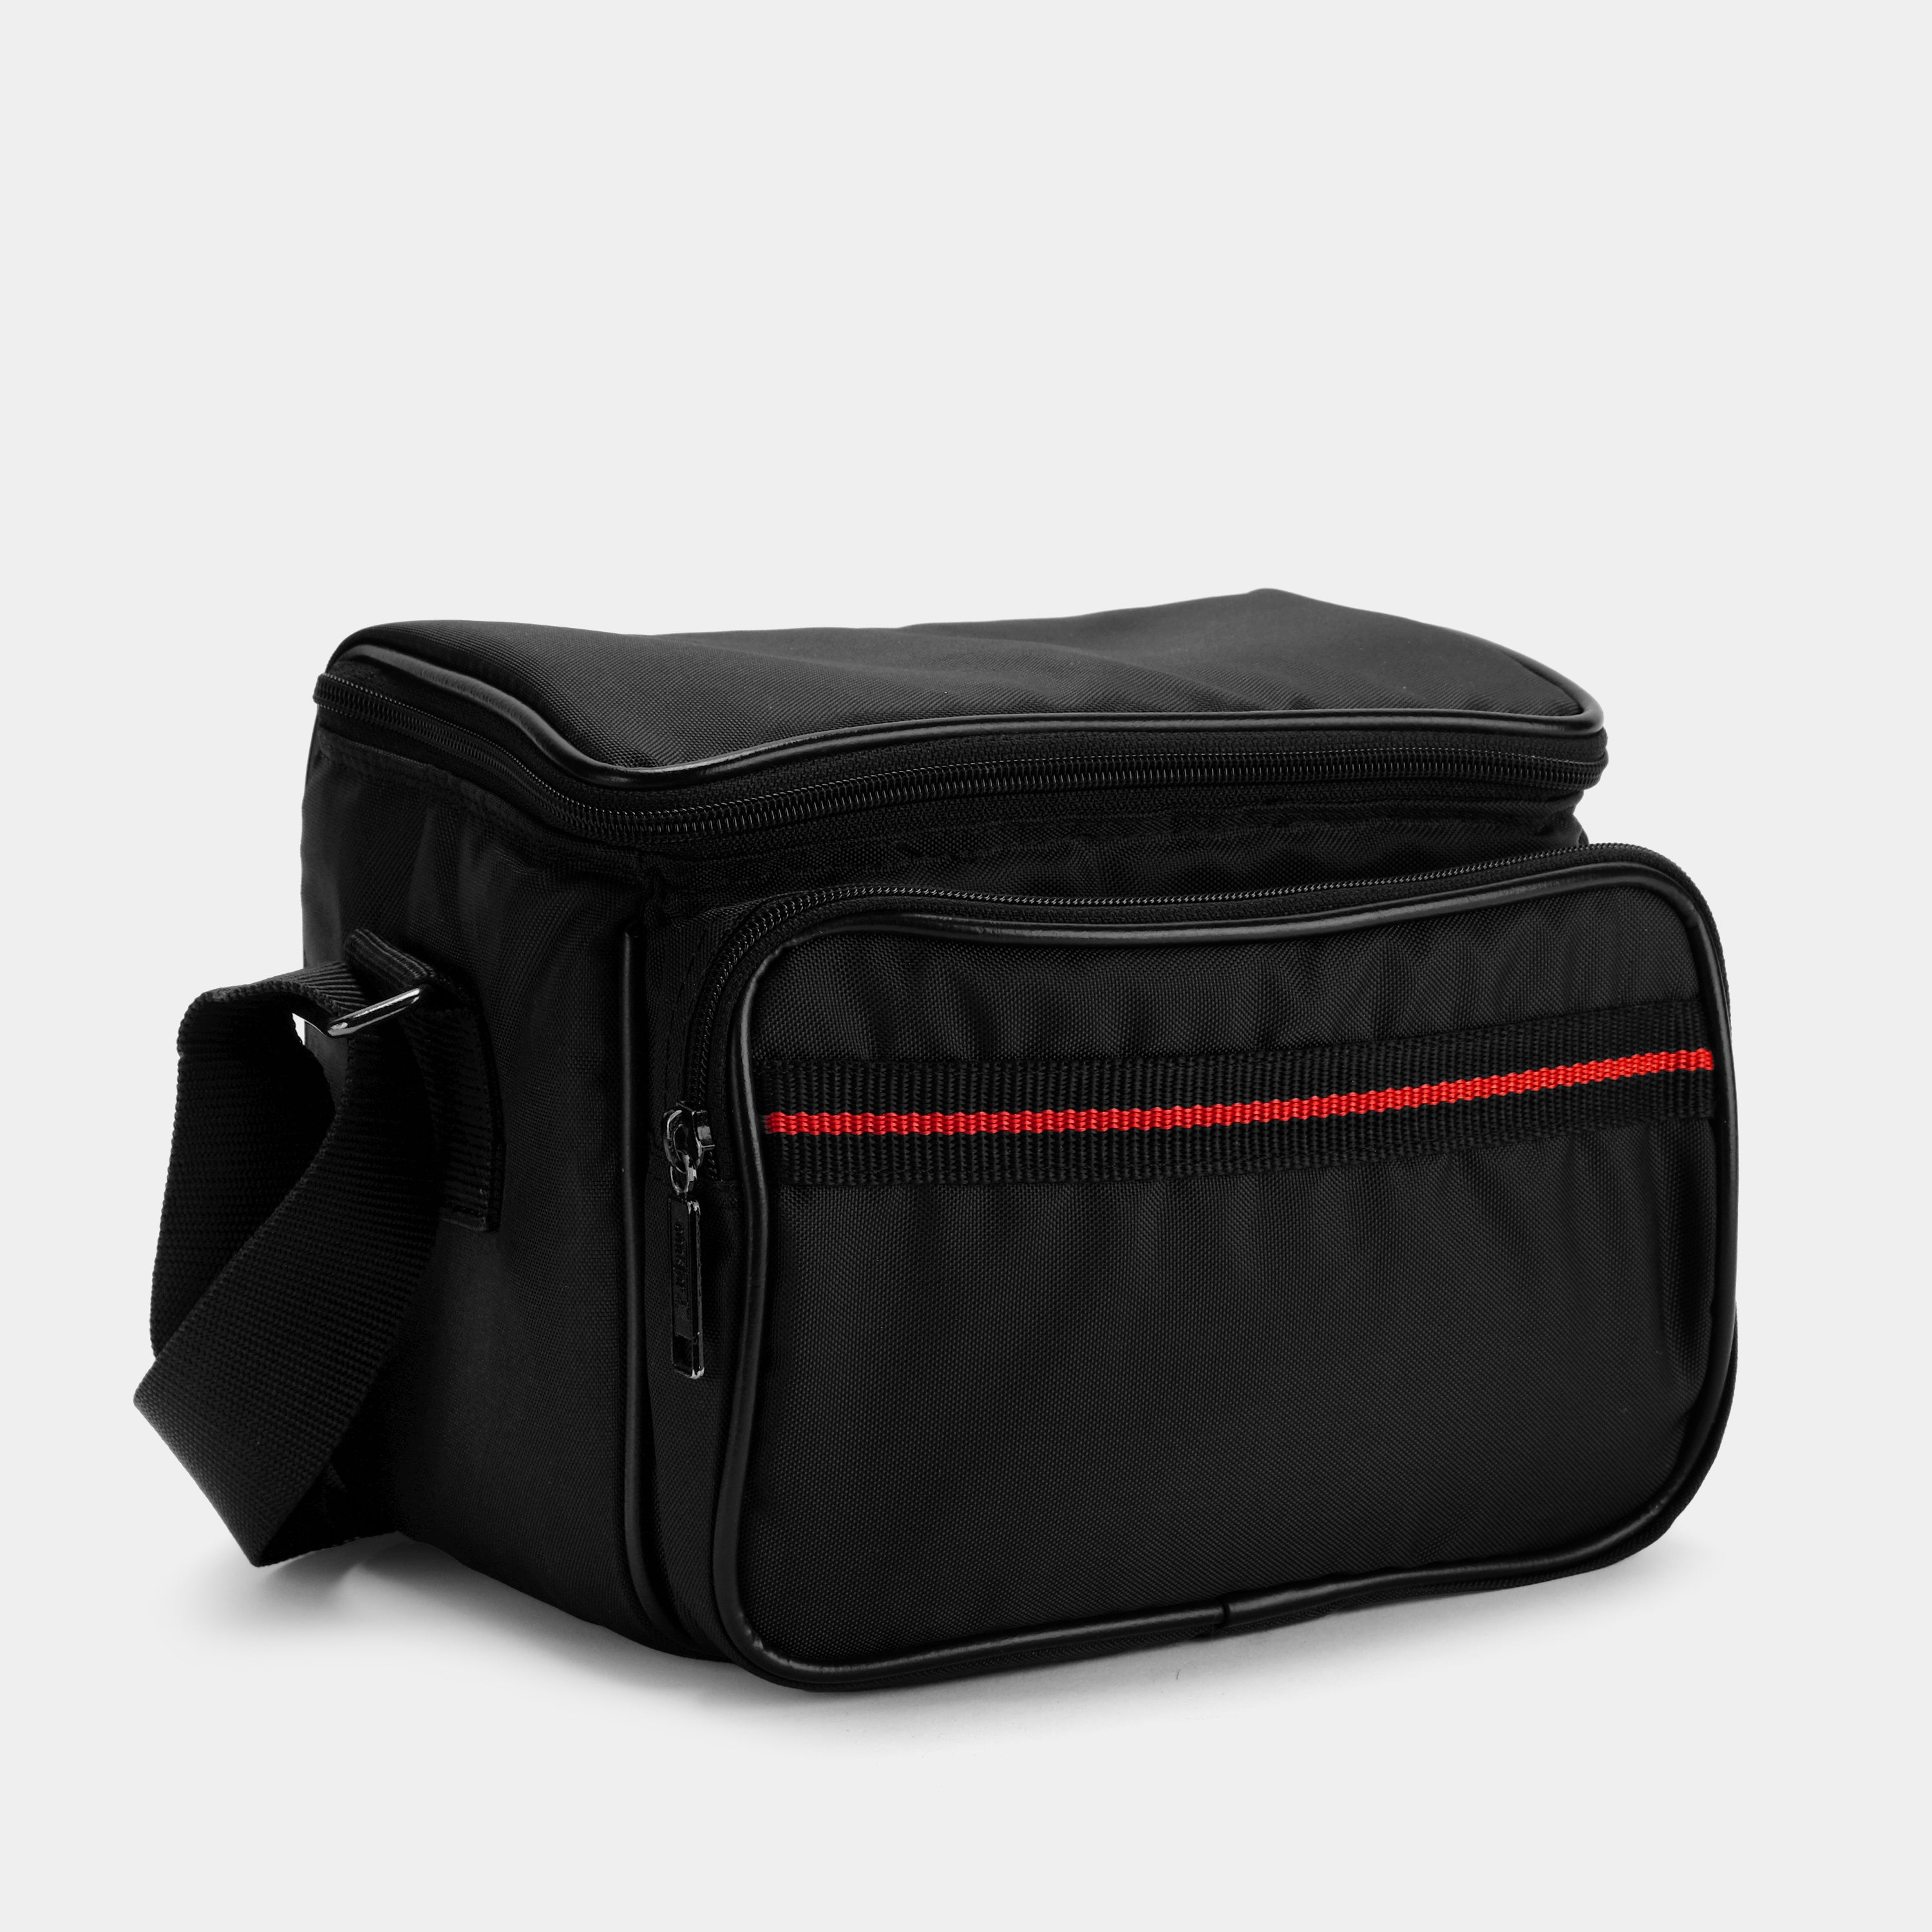 Black Camera Bag with Red Stripe